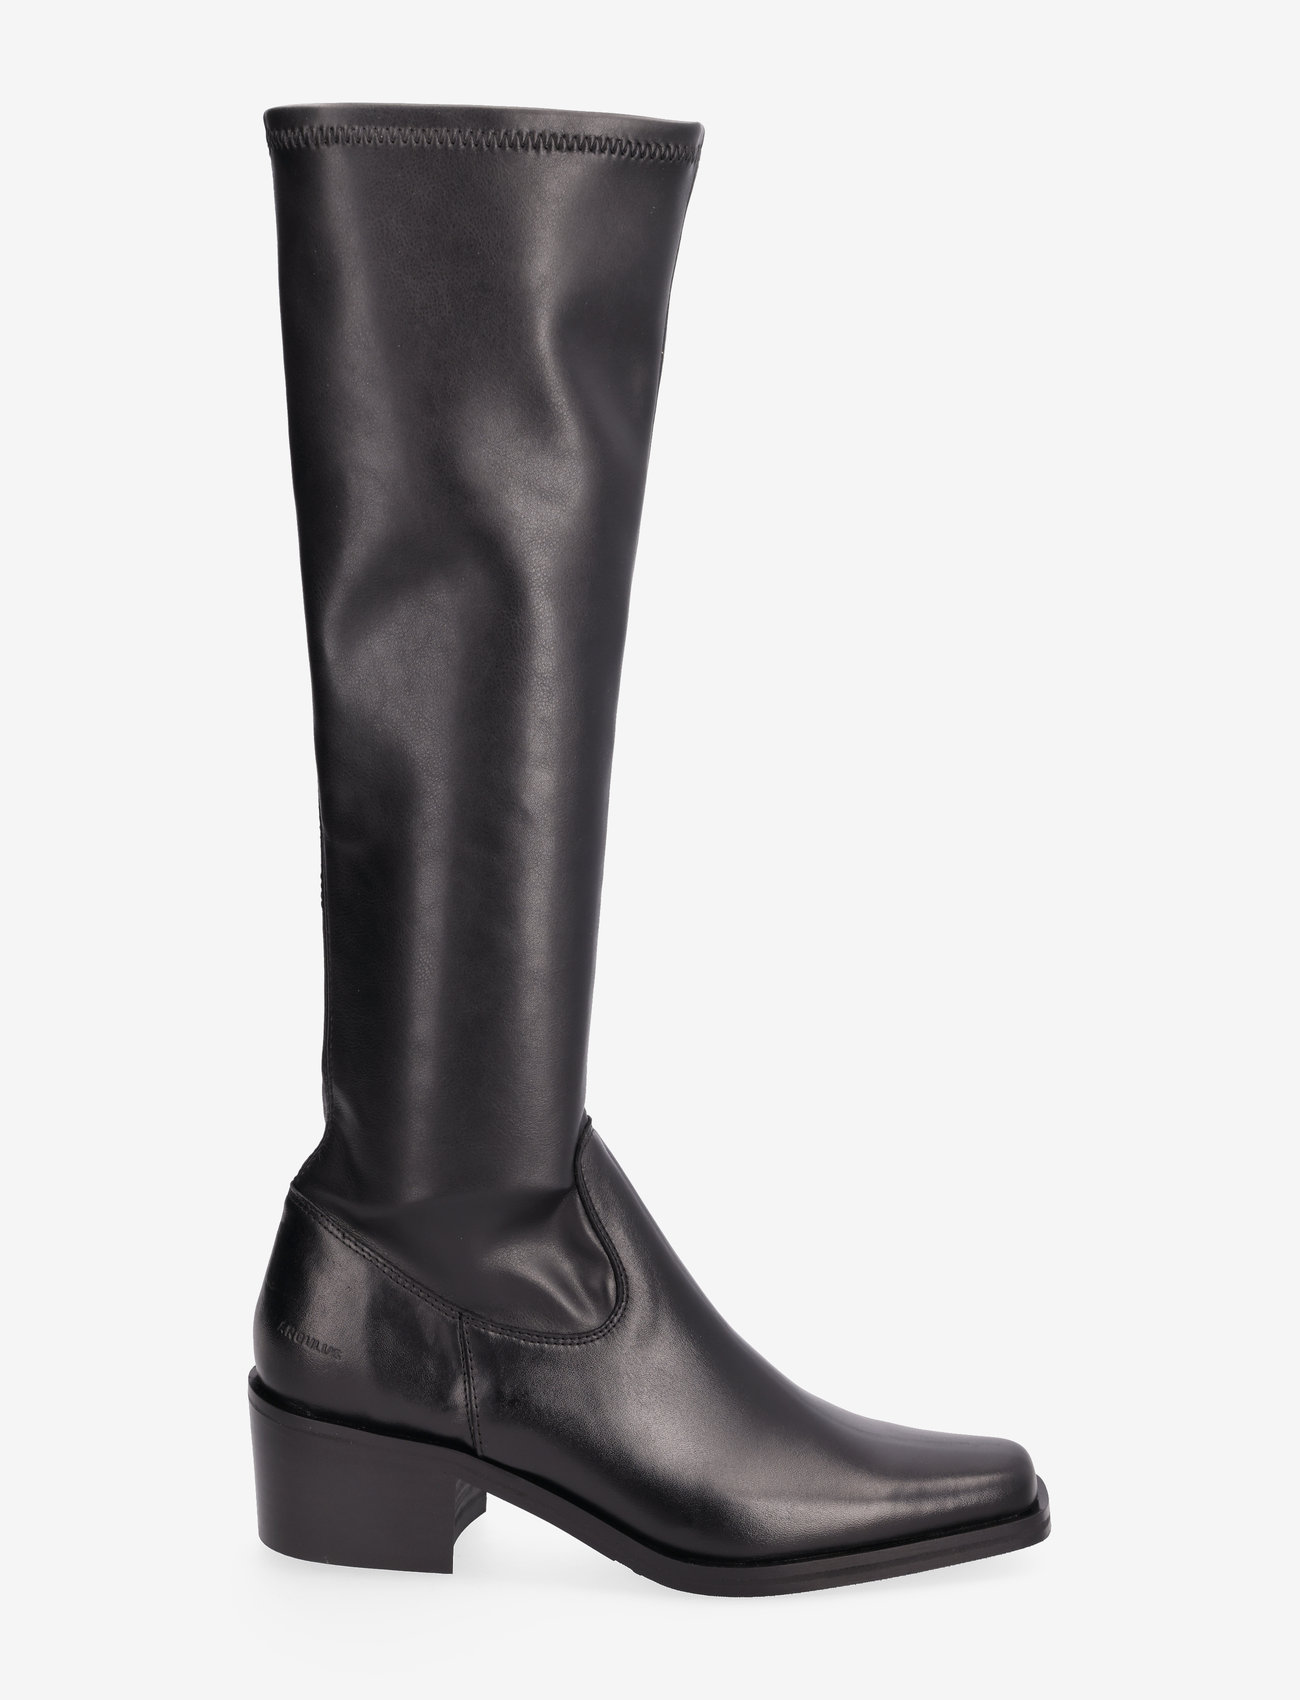 ANGULUS - Boots - Block heel - kniehohe stiefel - 1604/1746 black/black - 1